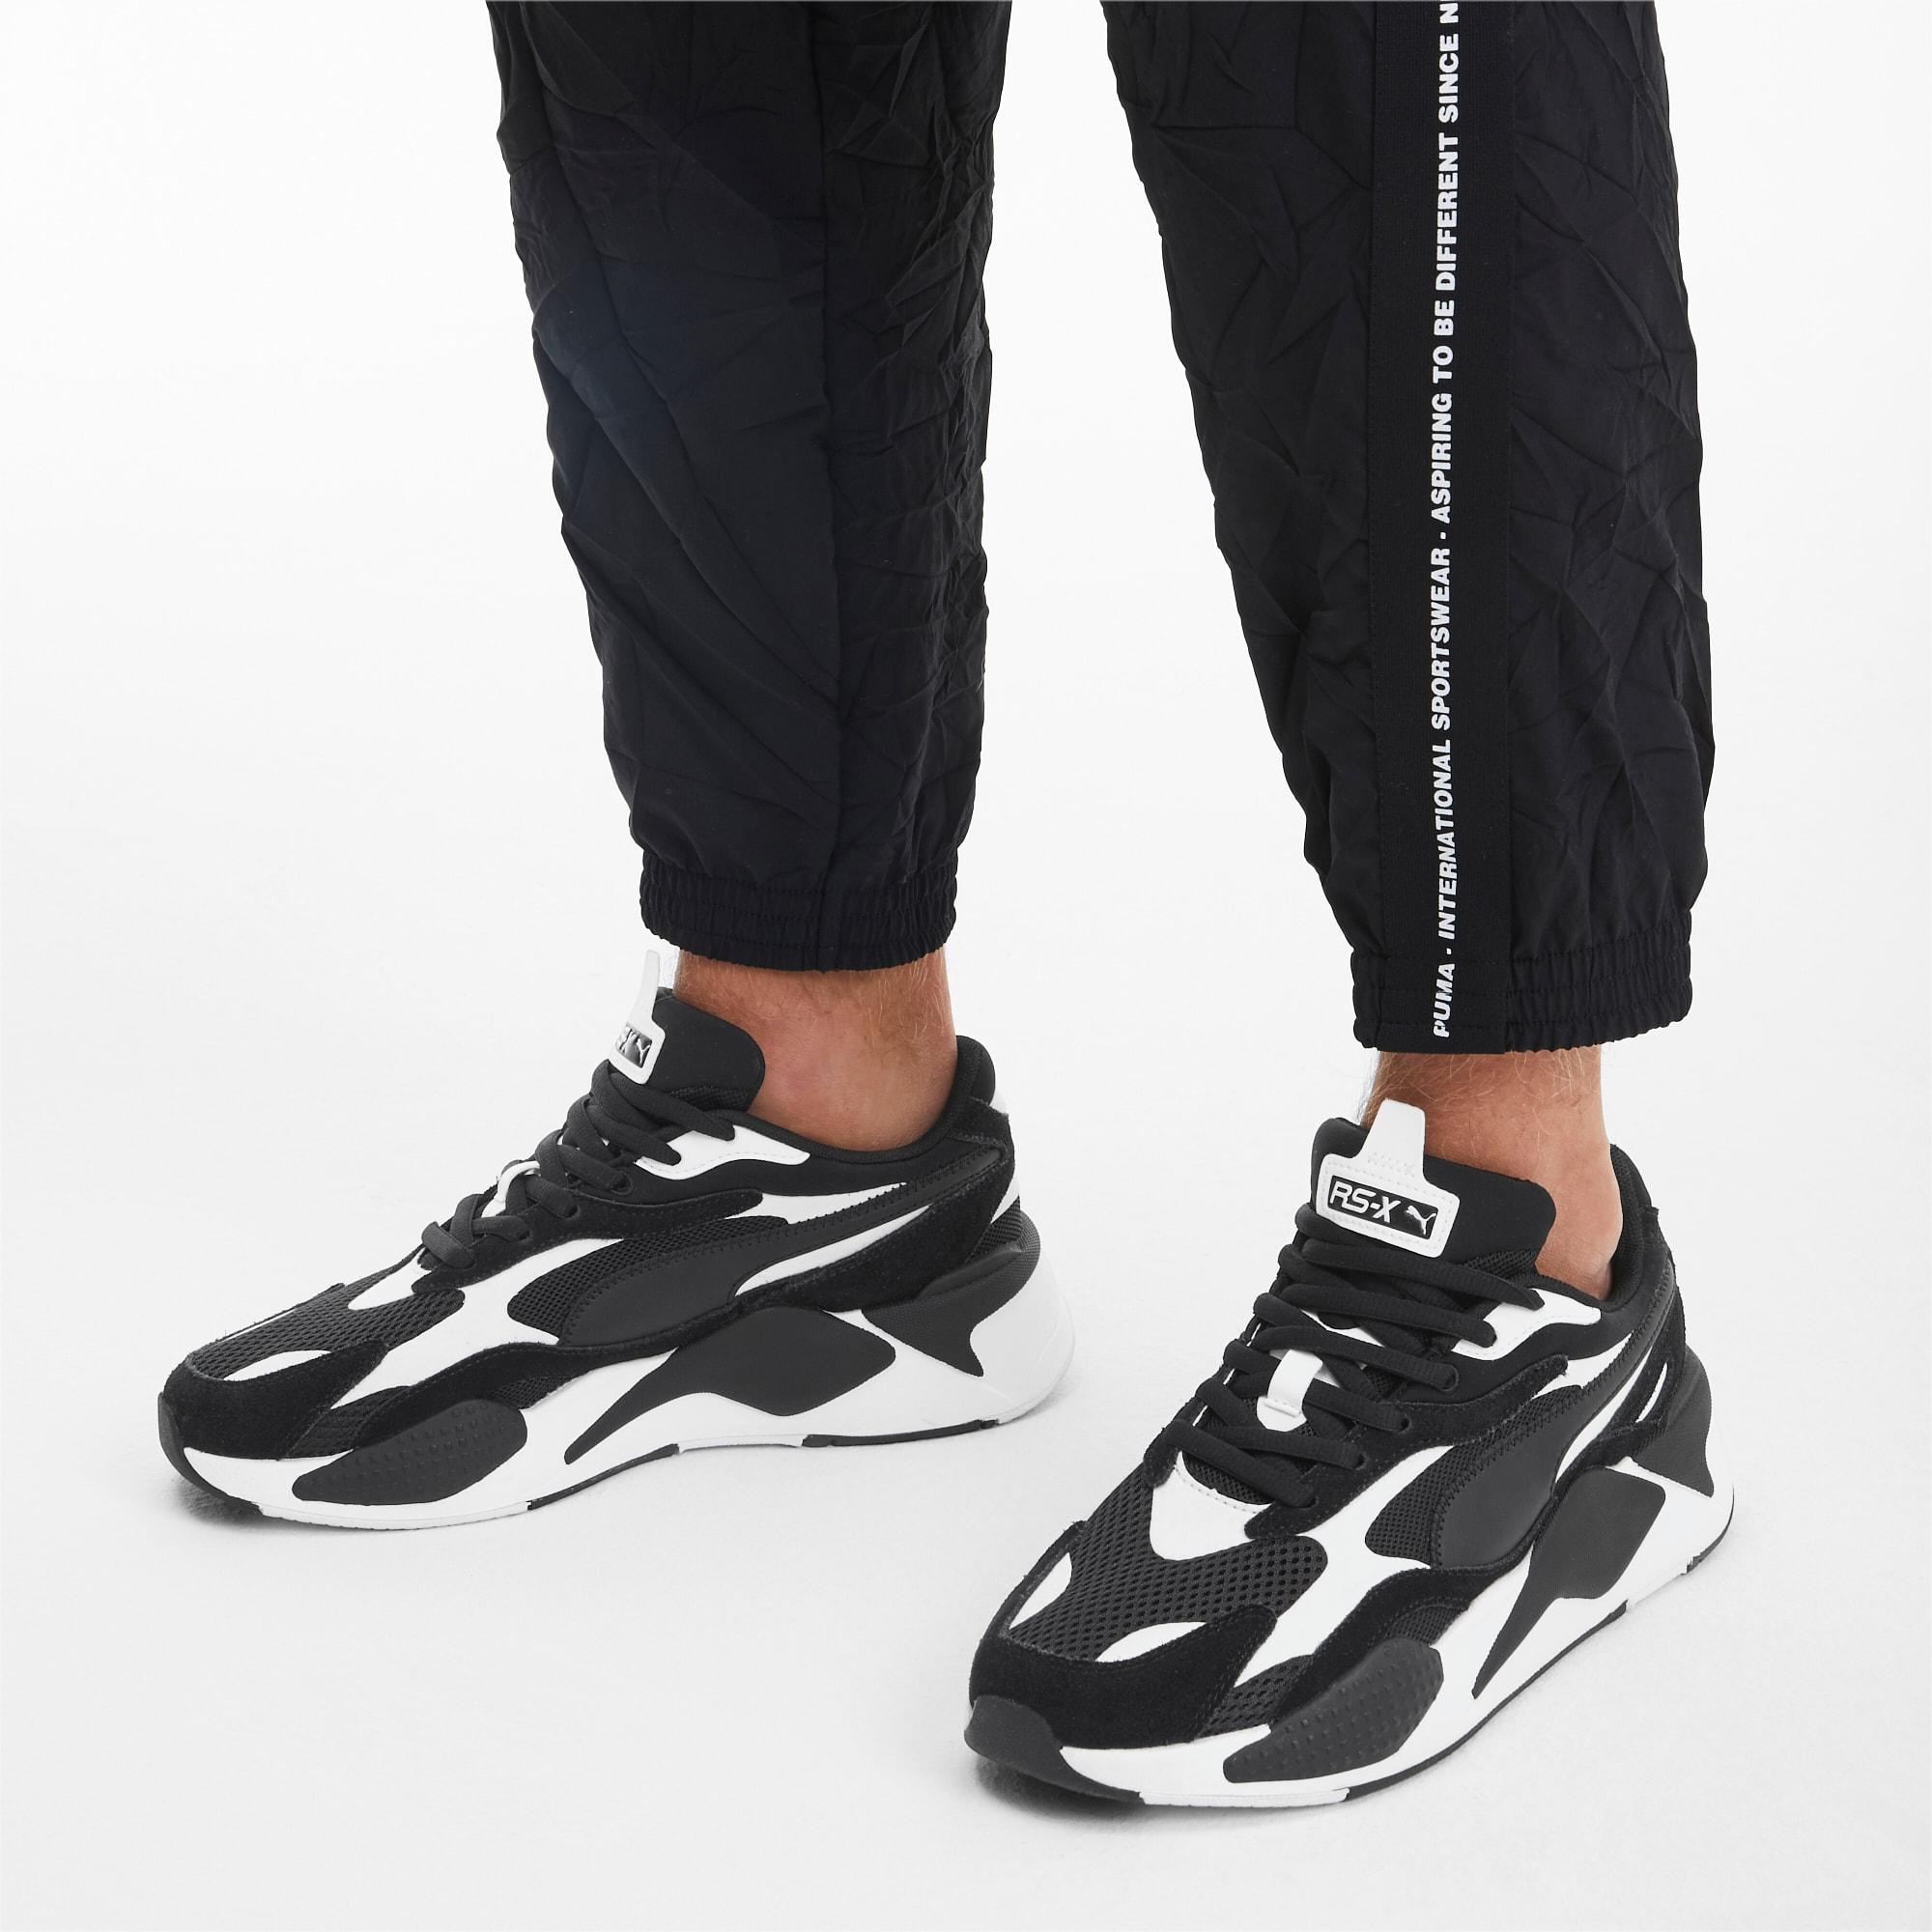 PUMA Suede Rs-x3 Super Sneakers in Black/White 2 (Black) | Lyst